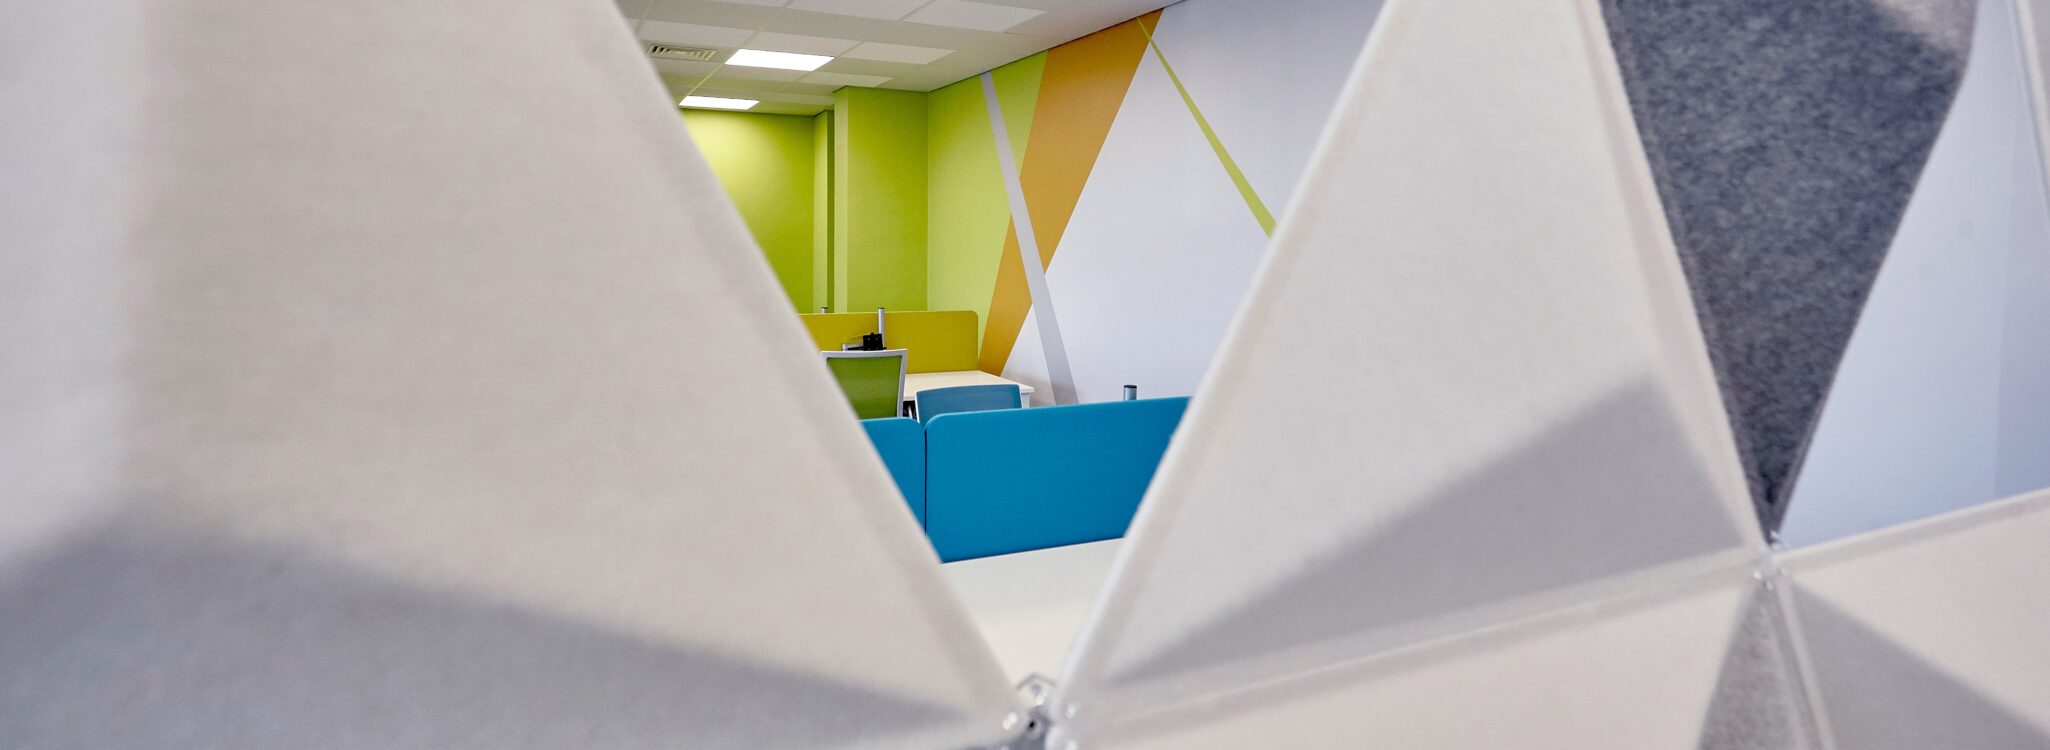 Dixons Carphone — Interiors — Branded office space